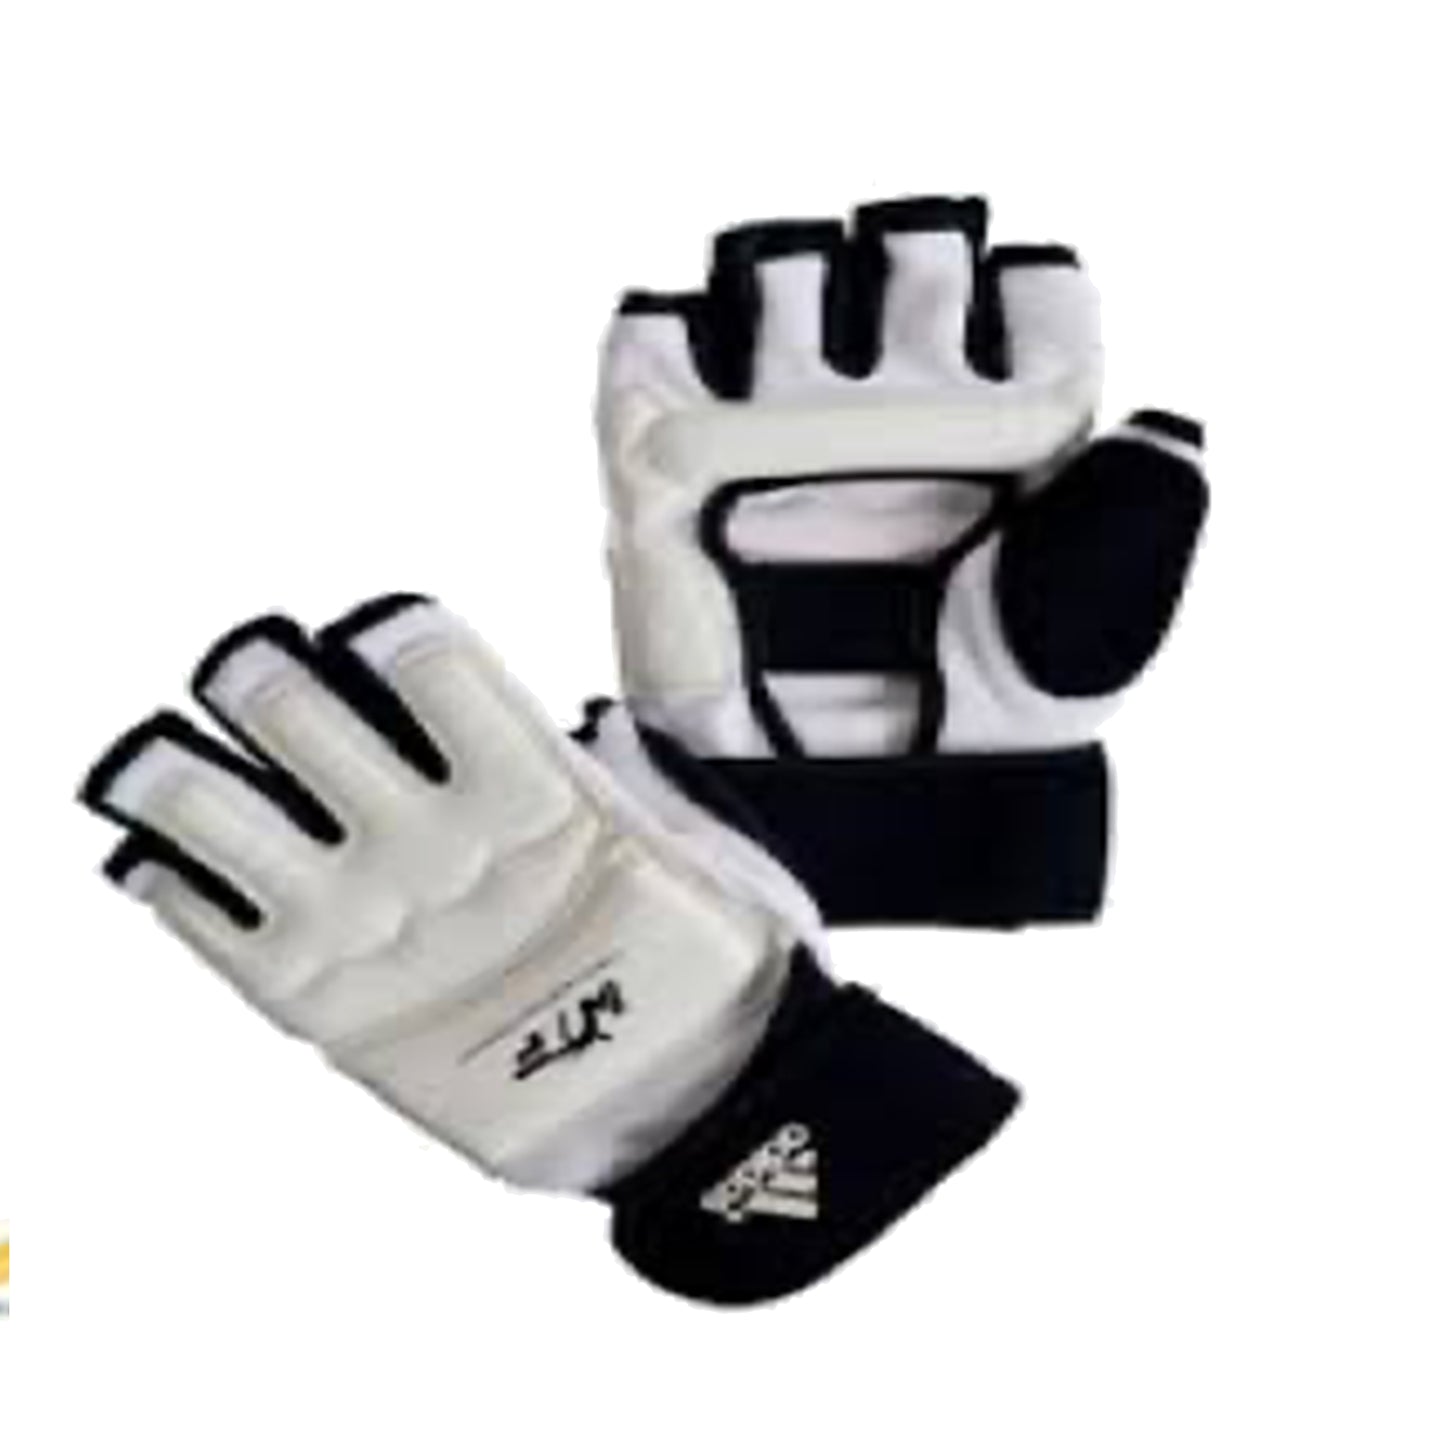 Taekwondo Fighter Gloves - Adidas